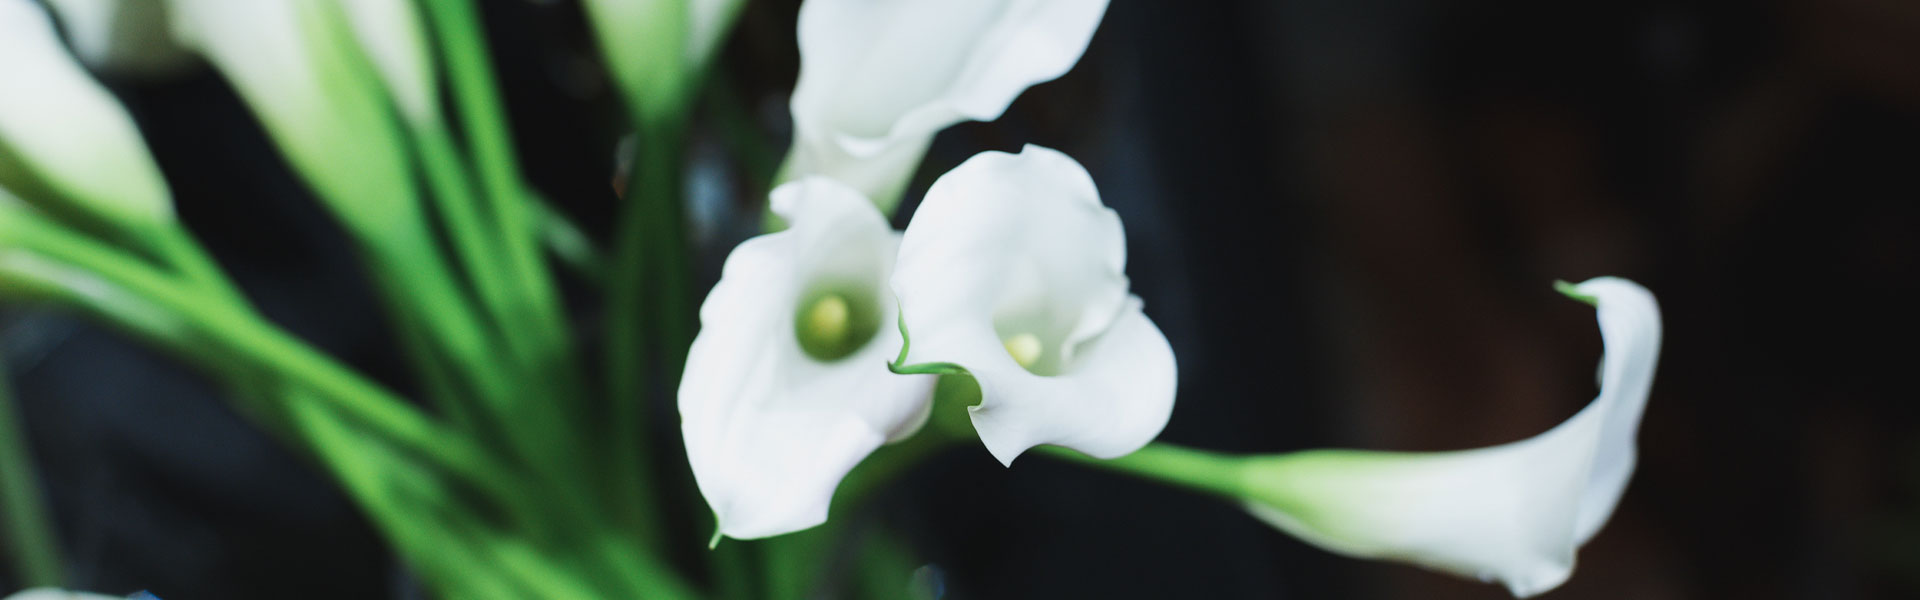 Flower Feature: Calla Lilies 